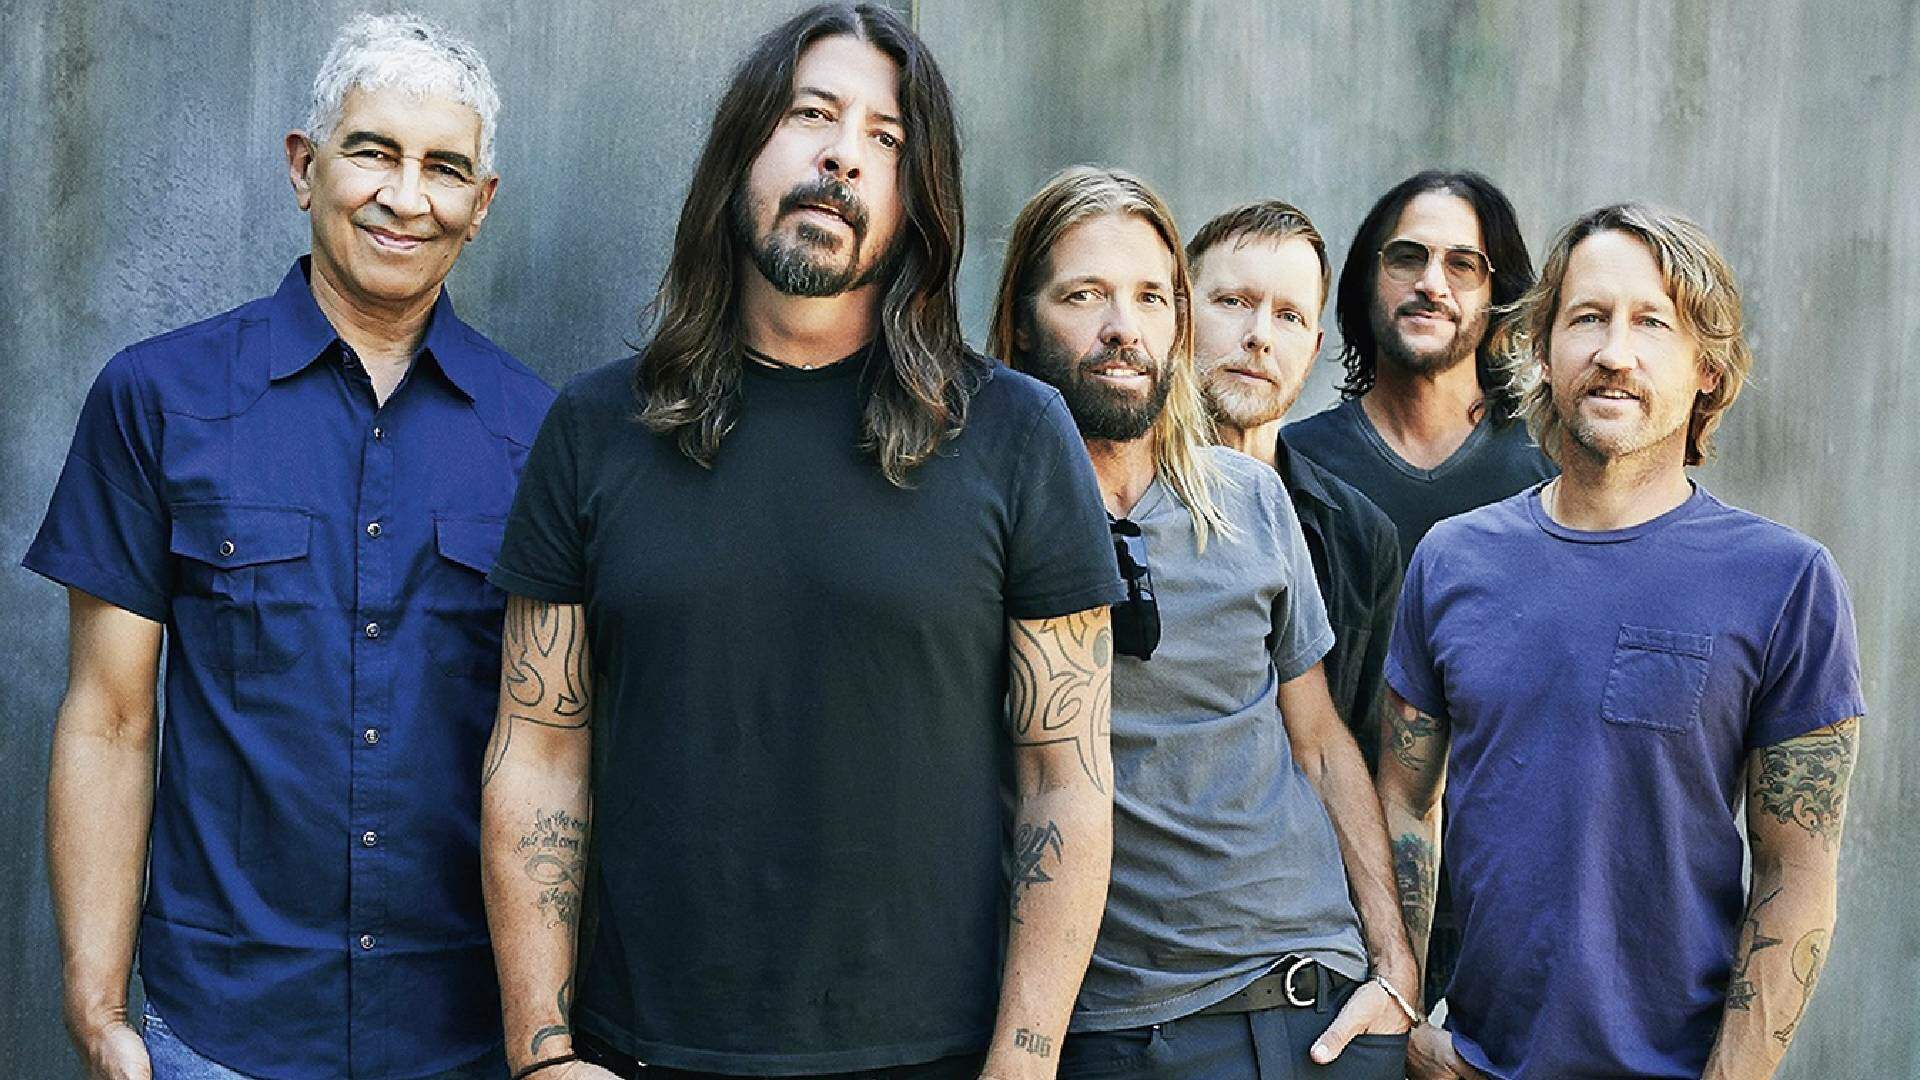 Após morte do baterista Taylor Hawkins, Foo Fighters anuncia surpresa aos fãs: “para vocês”